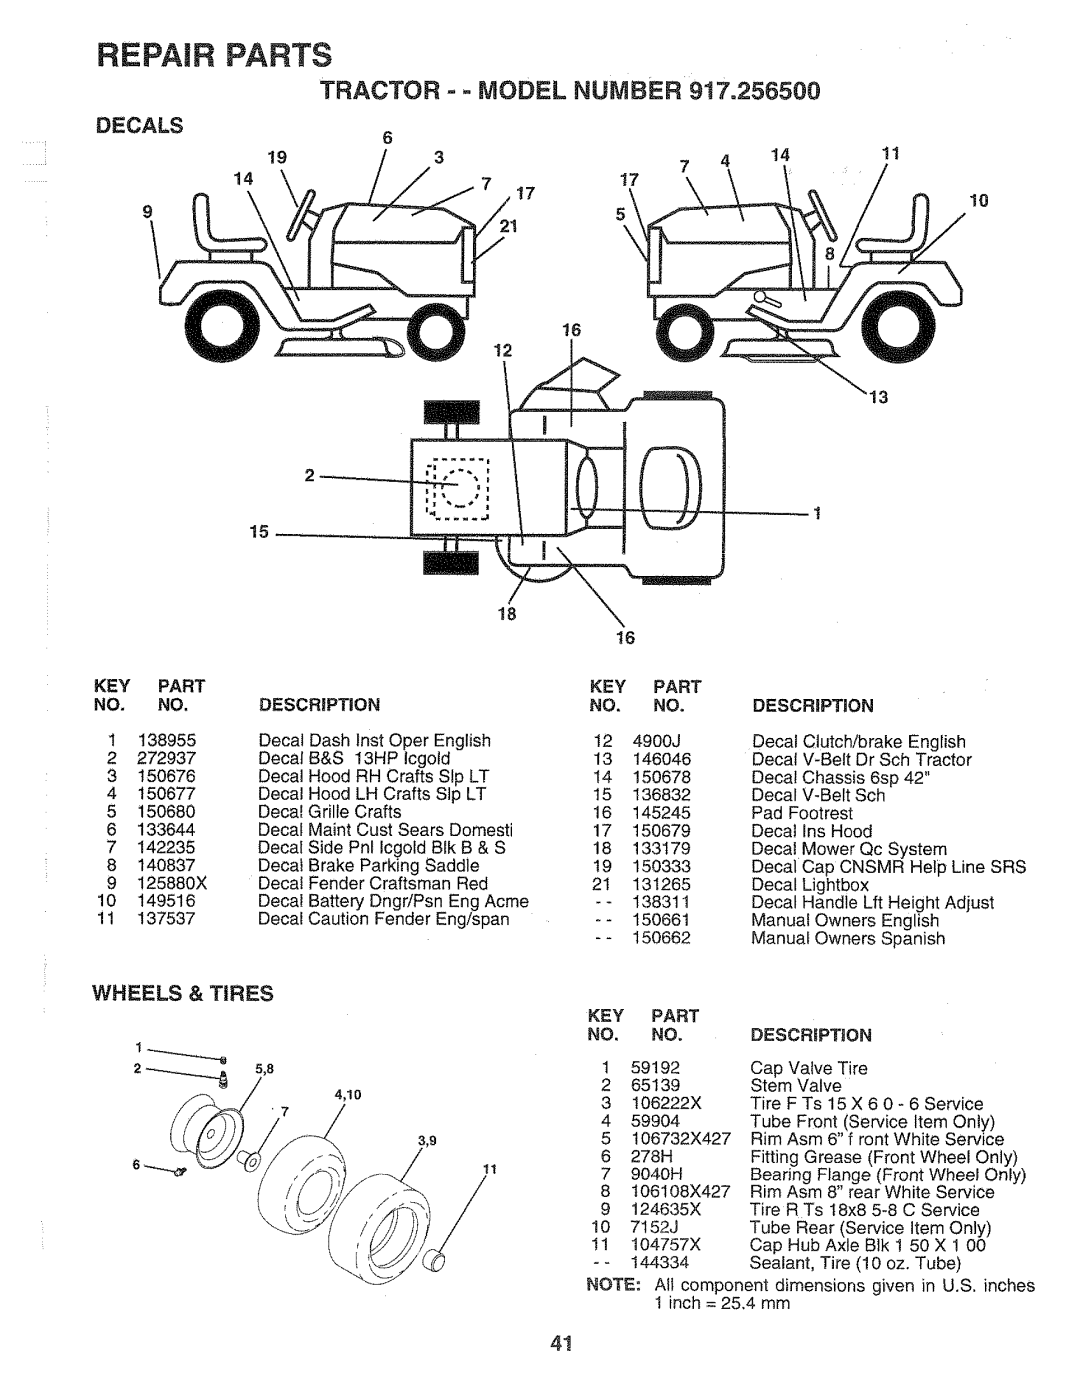 Sears 917.2565 manual TRACTOR- = MODEL NUIVlBER, Decals, Wheels & Tires, Repair Parts, Key Part, Description, DESCRiPTiON 